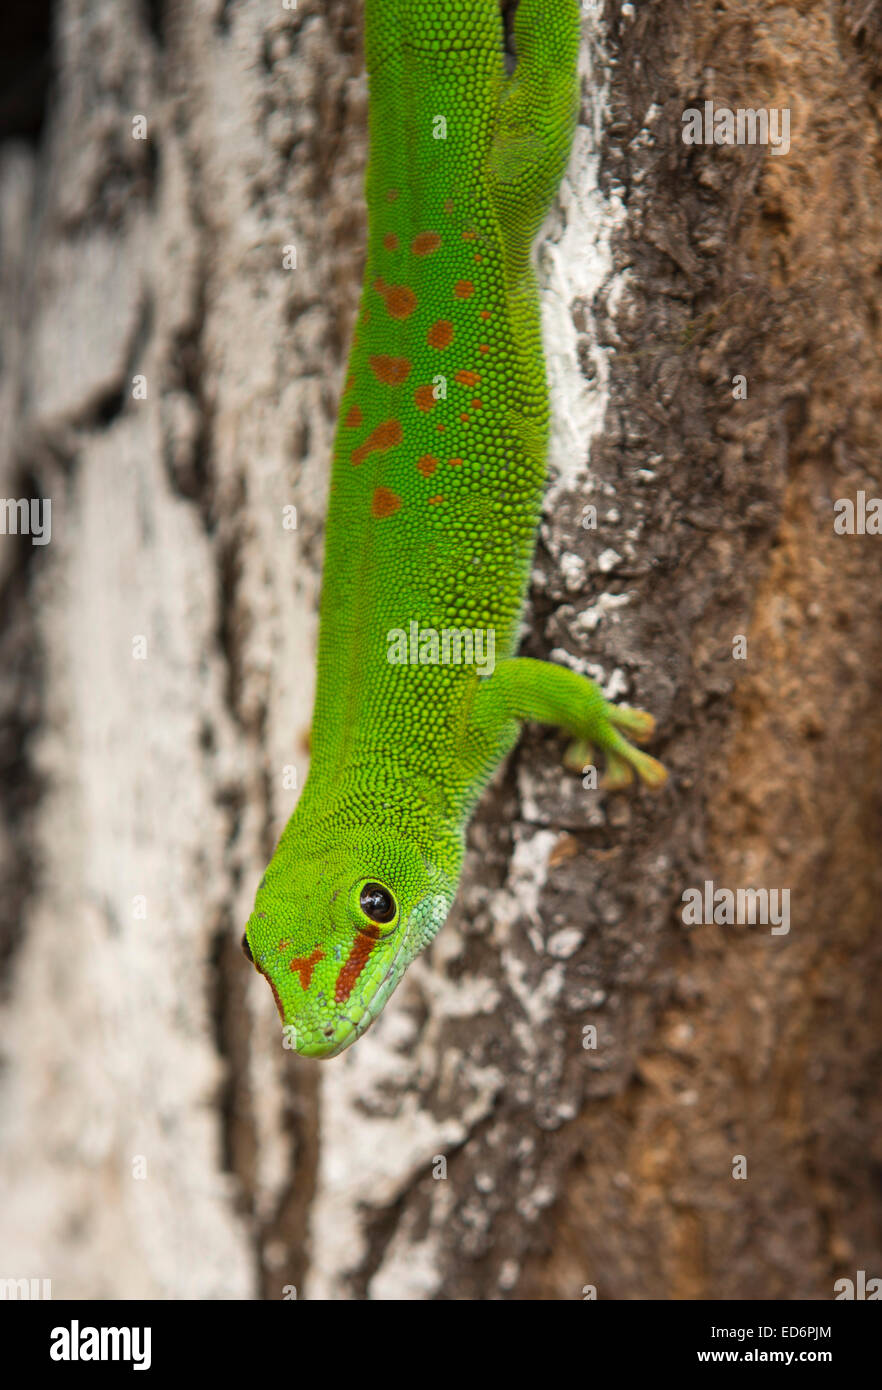 Mauritius, Tamarin, Black River Cemetery, Green Day Gecko Phelsuma madagascariensis on tree trunk Stock Photo